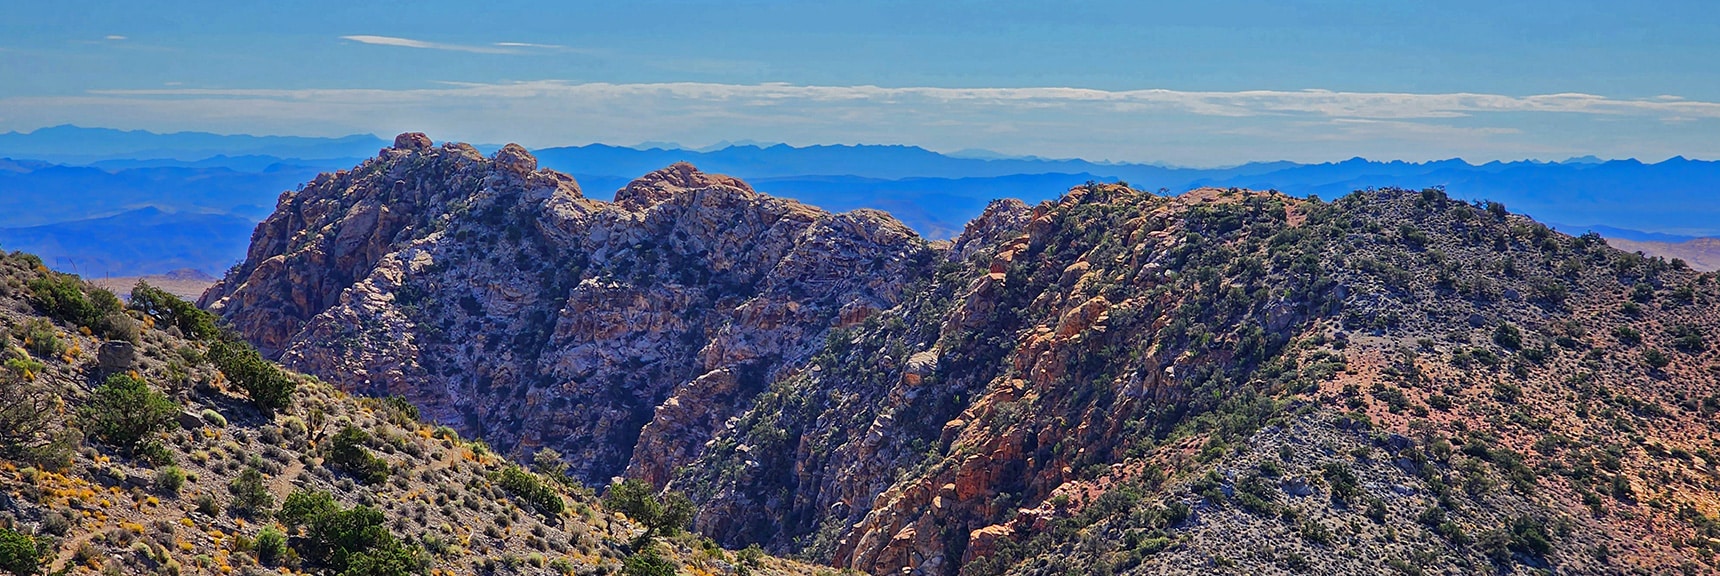 Final Descent Then a Re-ascent to Hollow Rock Peak Ahead | Hollow Rock Peak | Rainbow Mountain Wilderness, Nevada